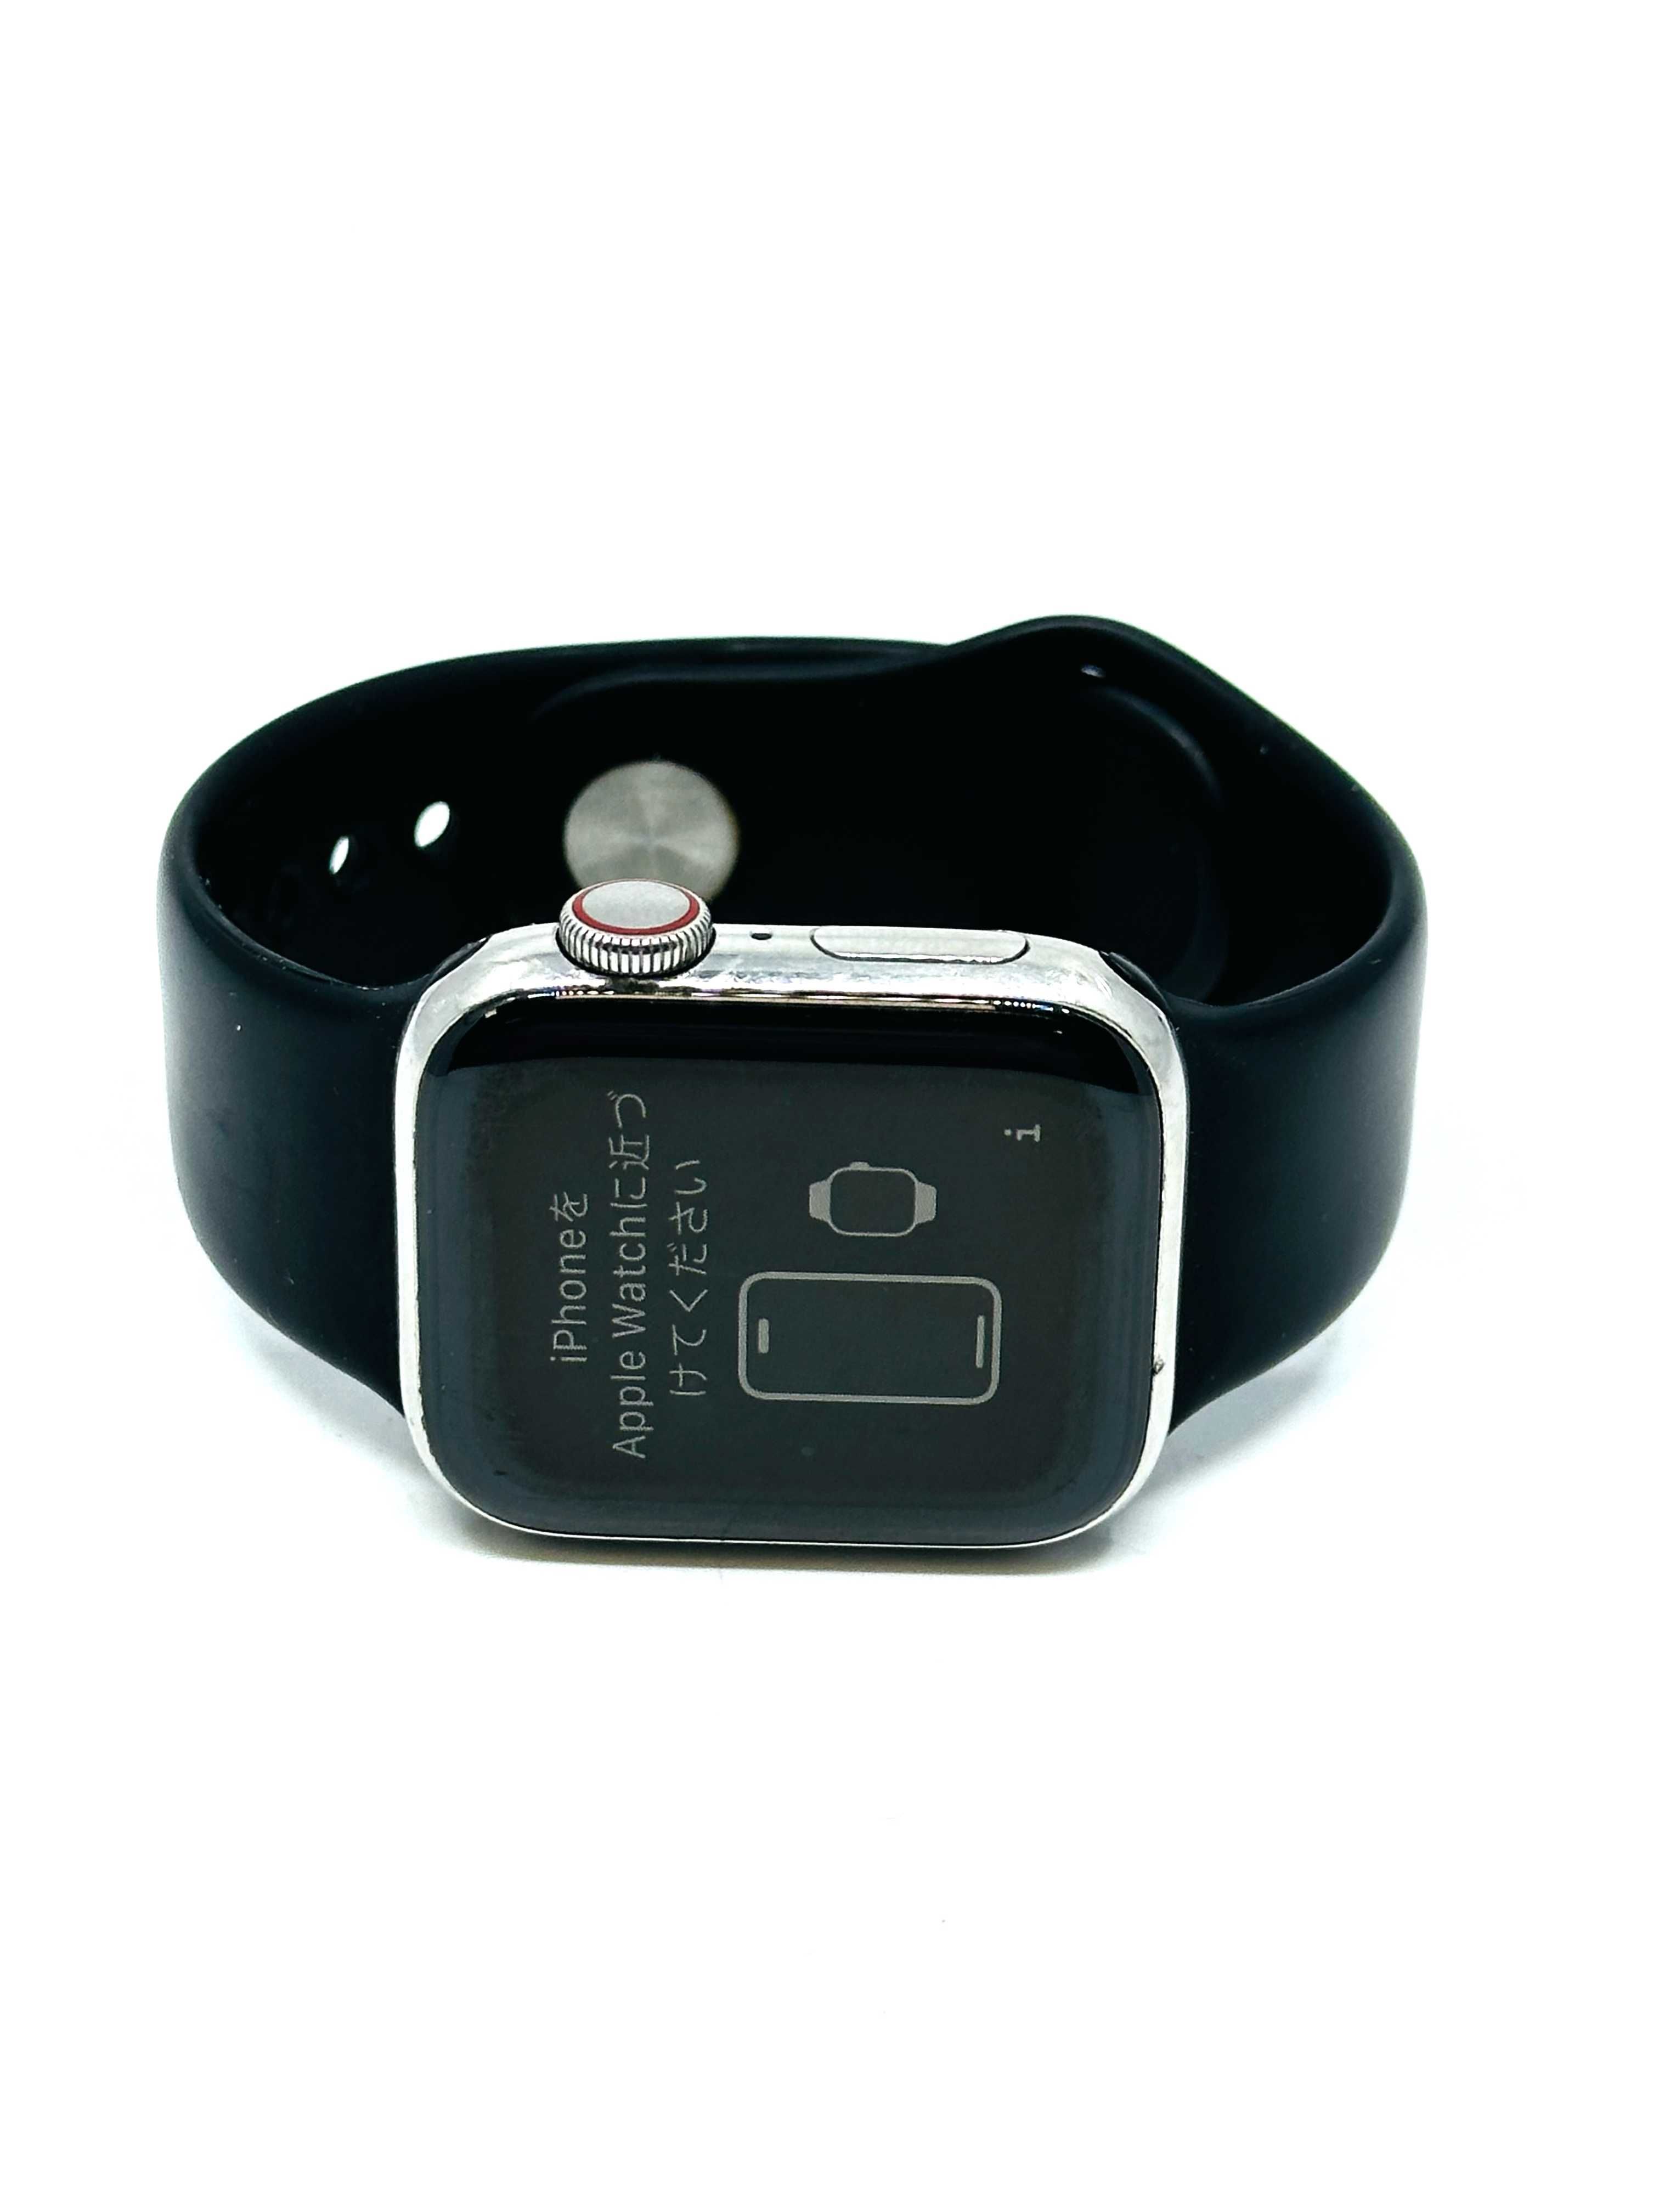 Smartwatch Apple Watch Series 4 40mm cellular